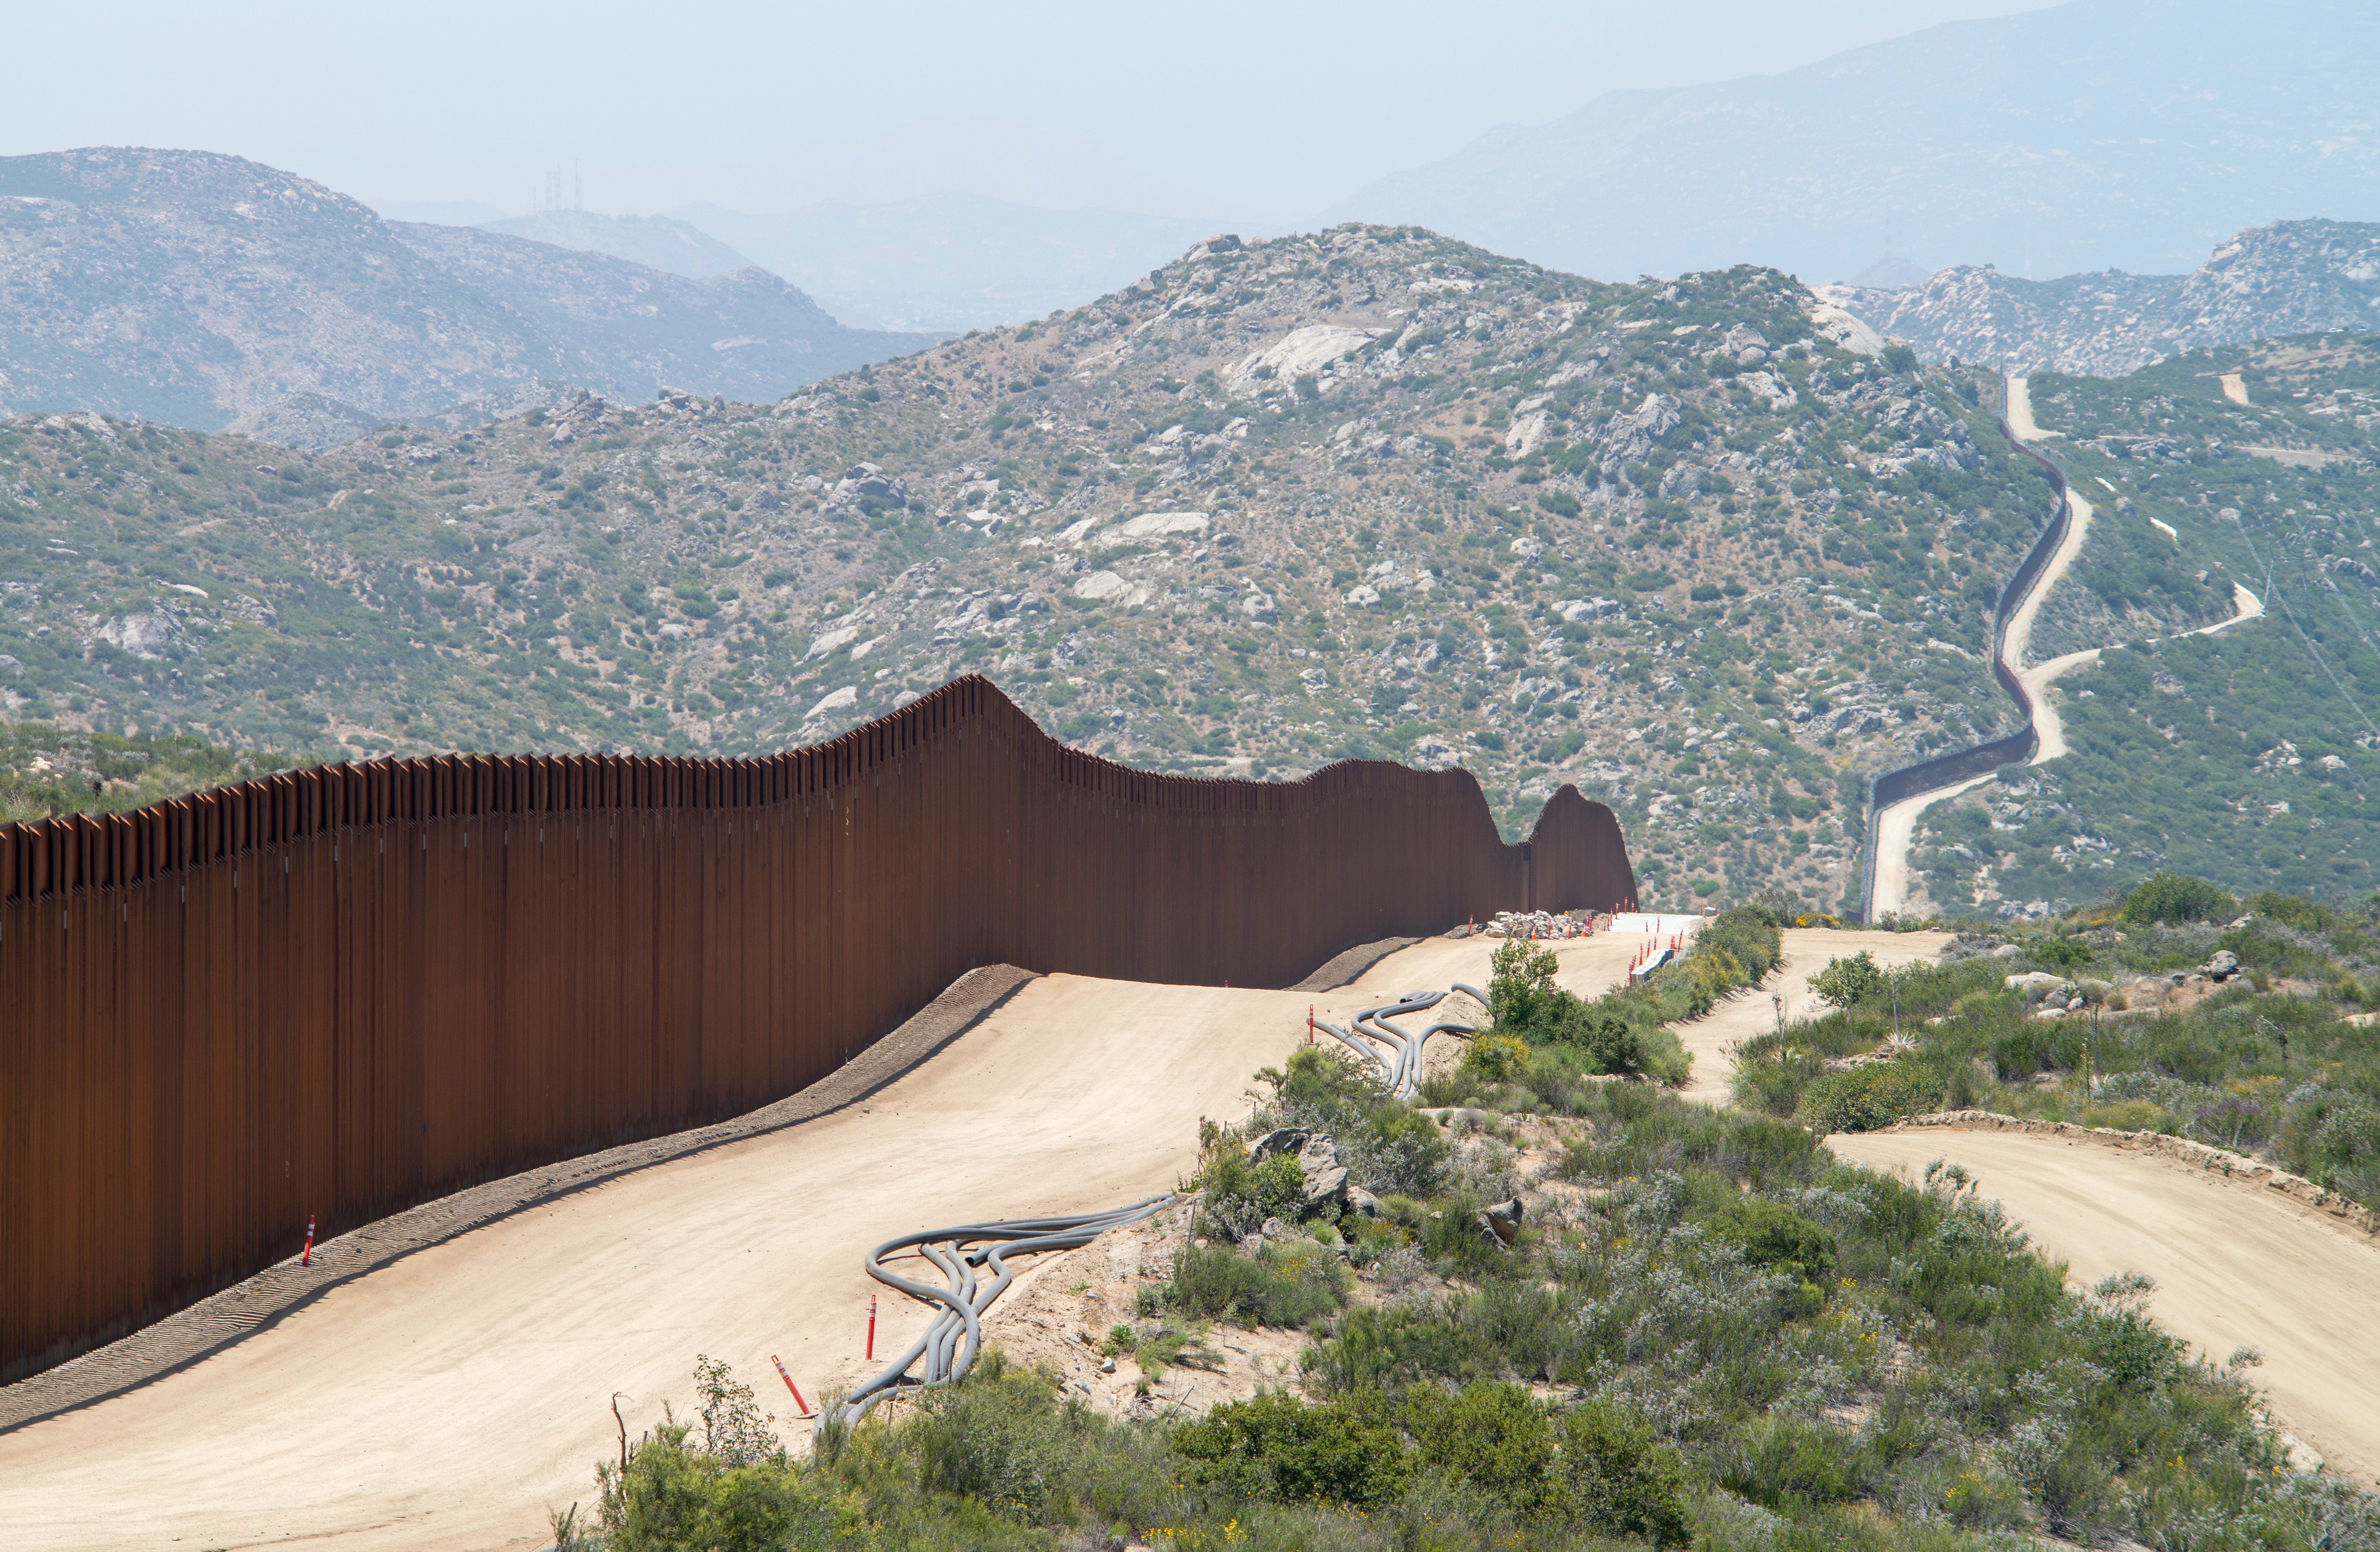 The border wall along the Mexican-American border